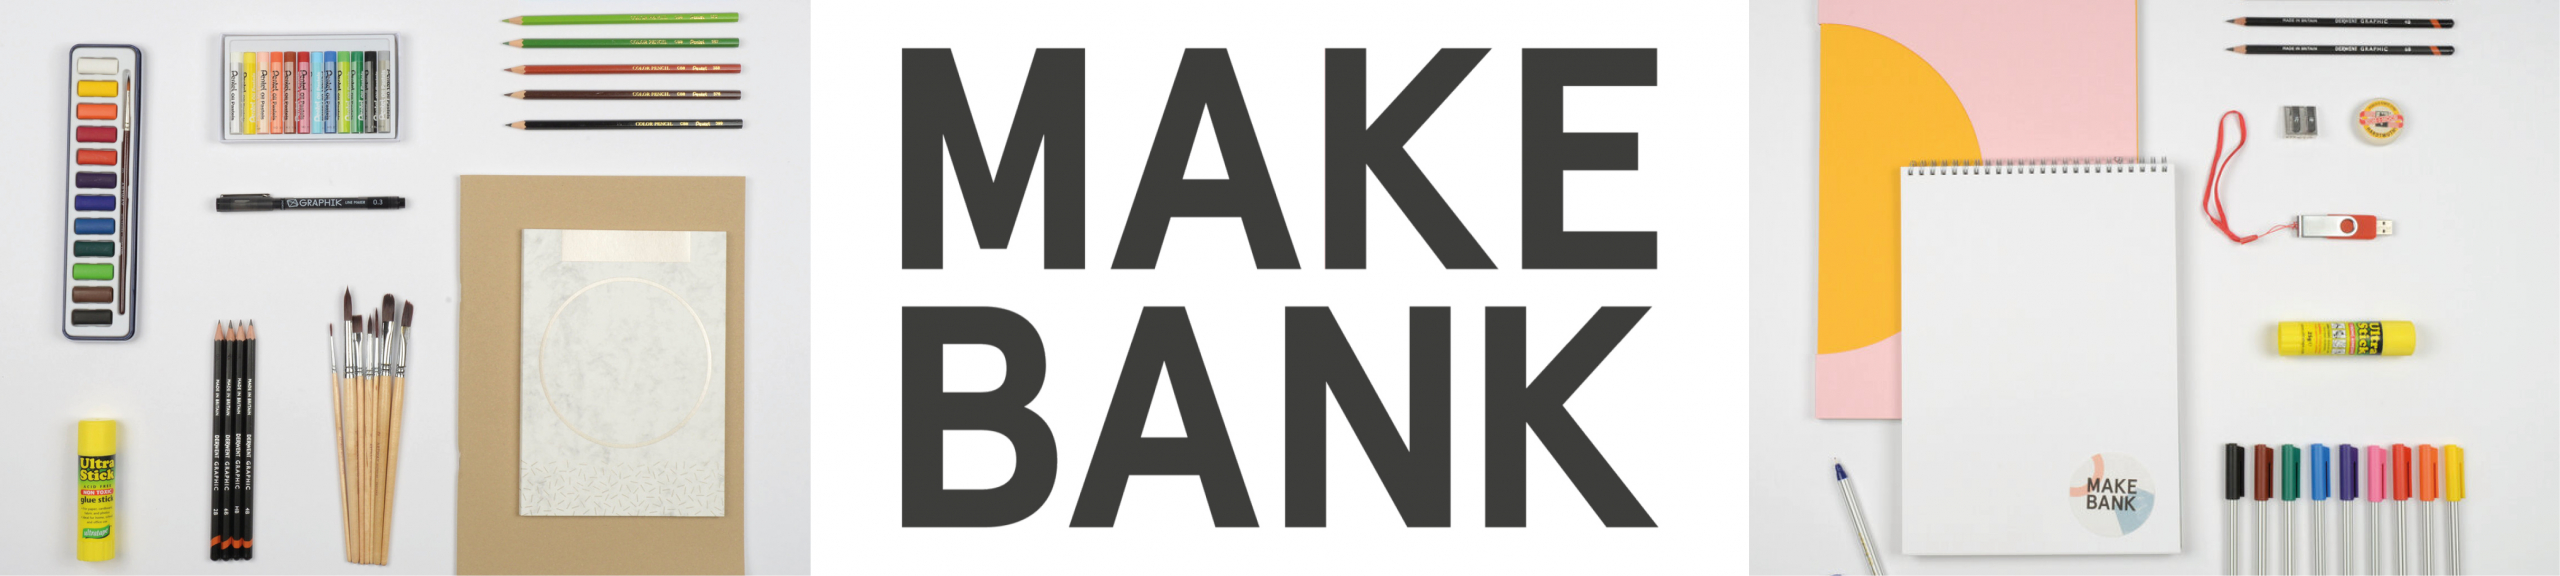 Art and design kits from Make Bank